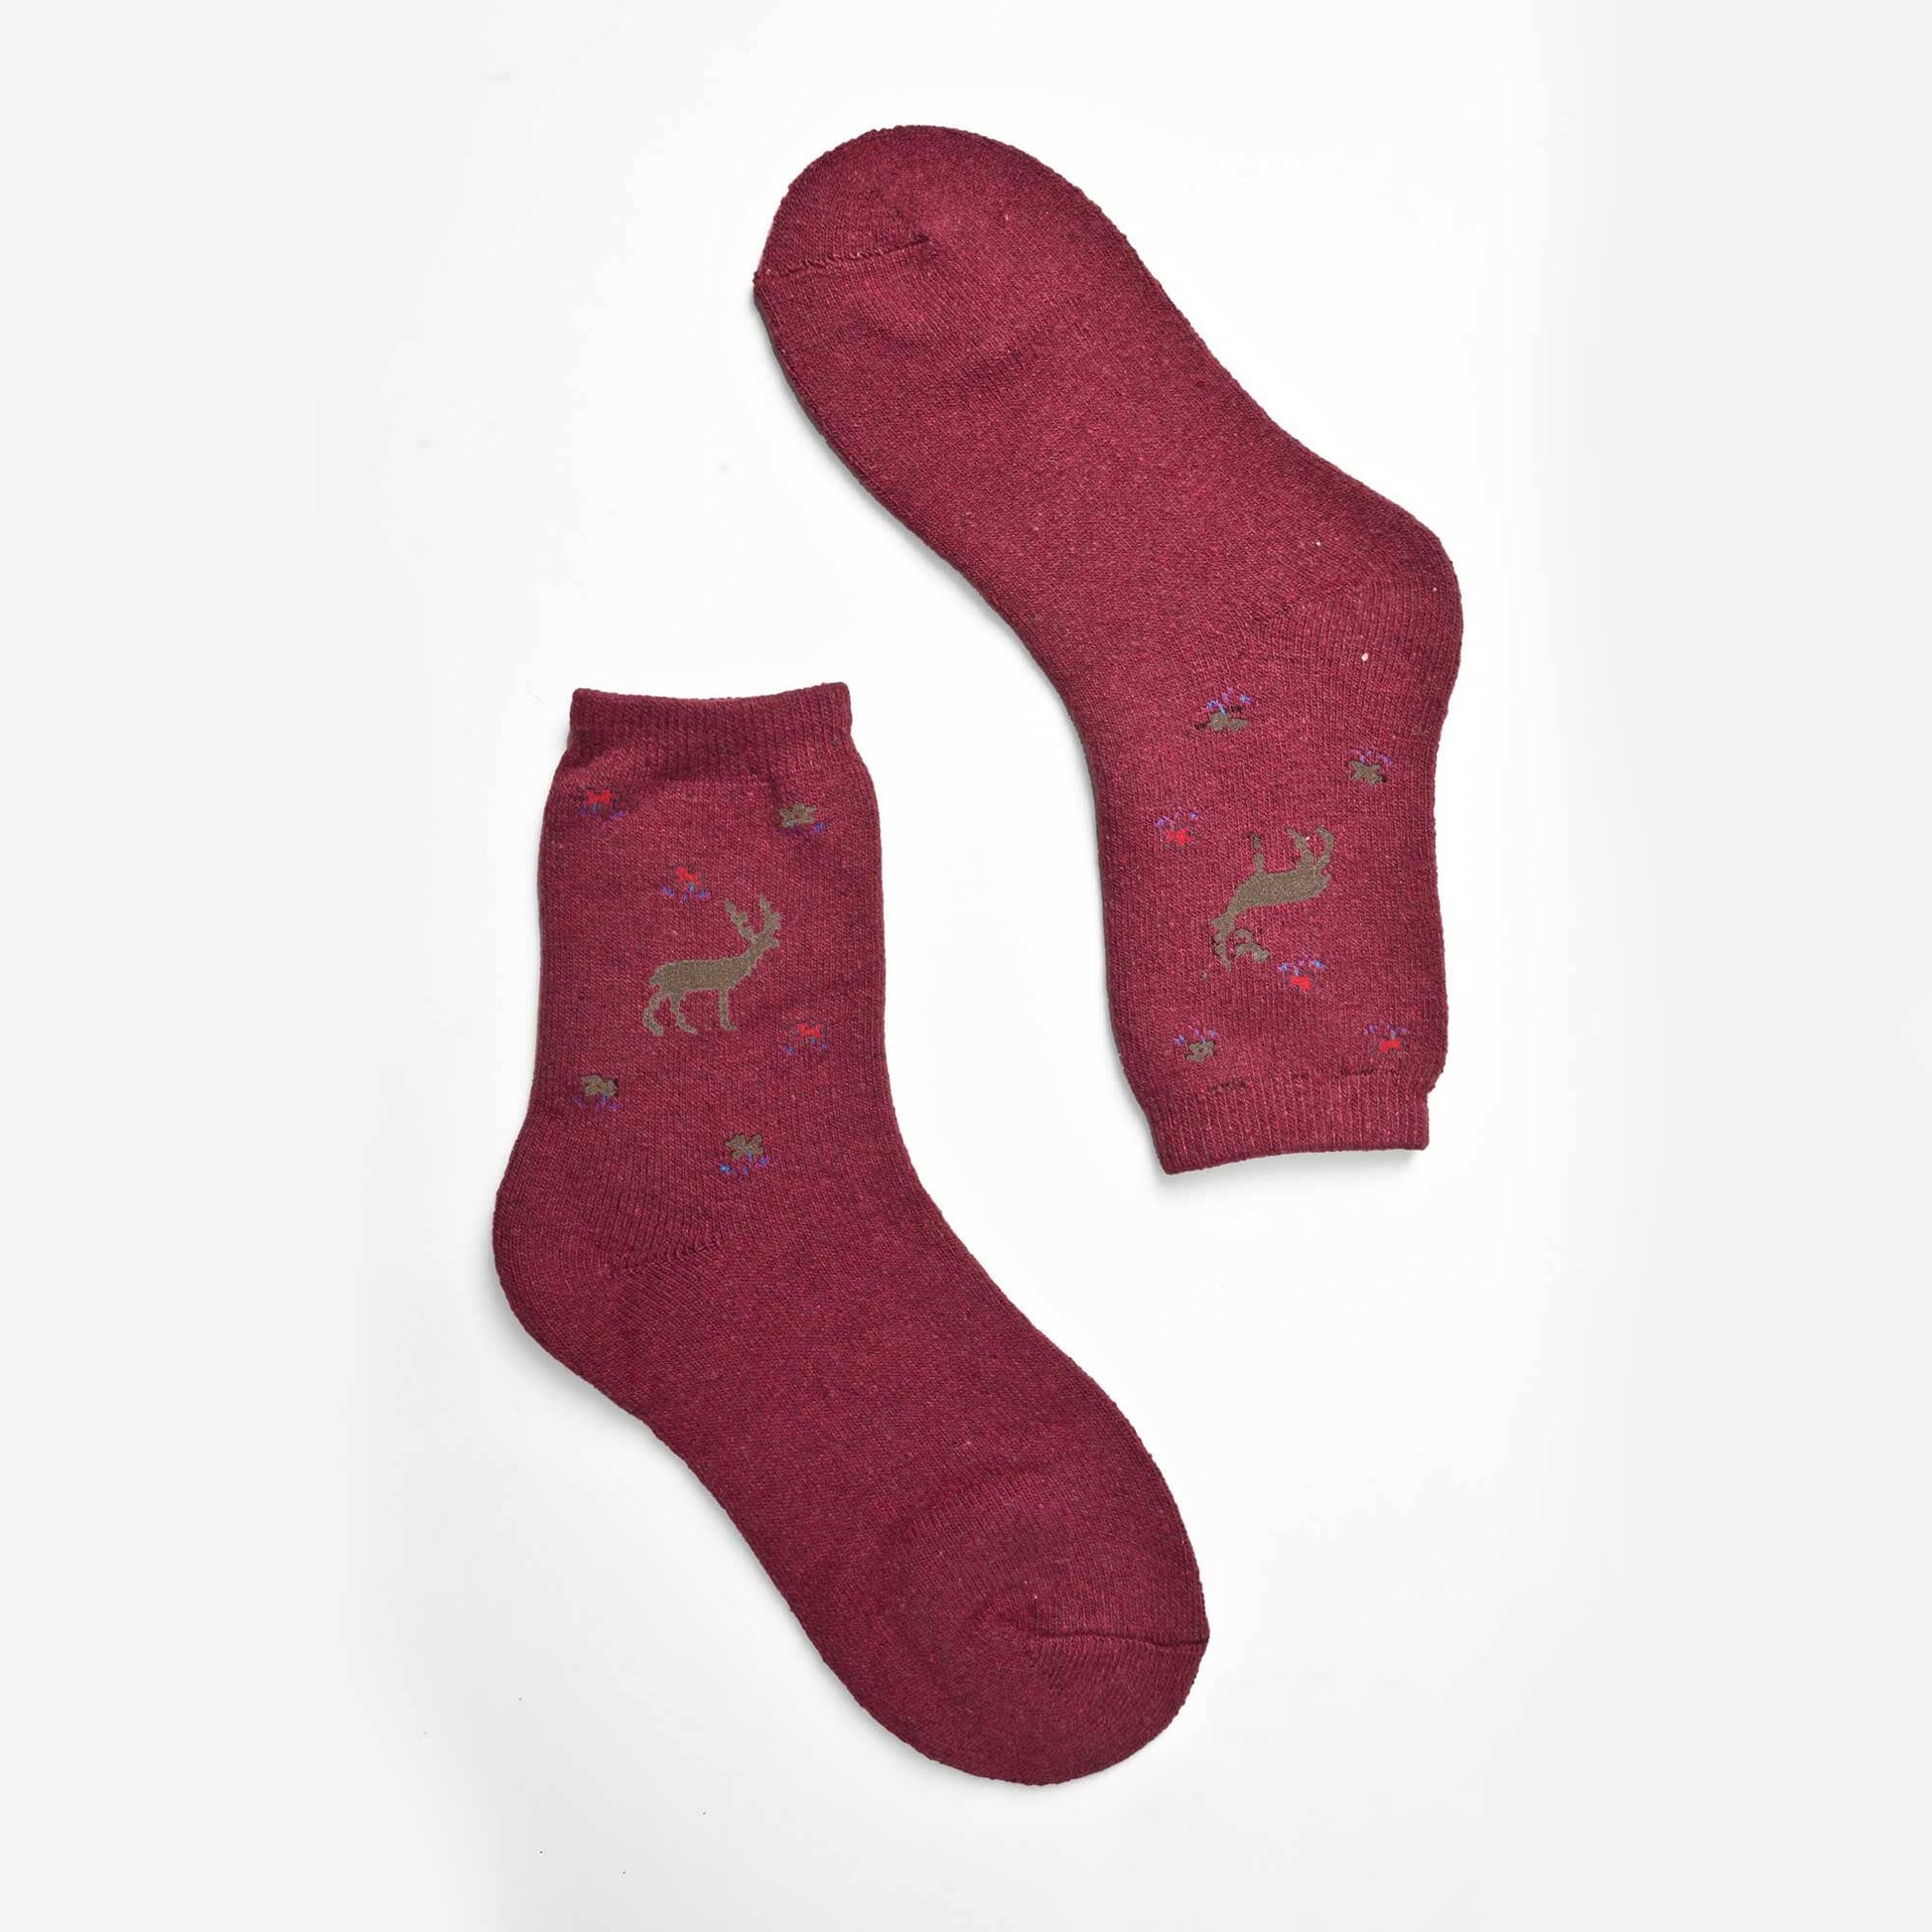 Tazoo Men's Deer Printed Crew Socks Socks SRL D4 EUR 36-41 